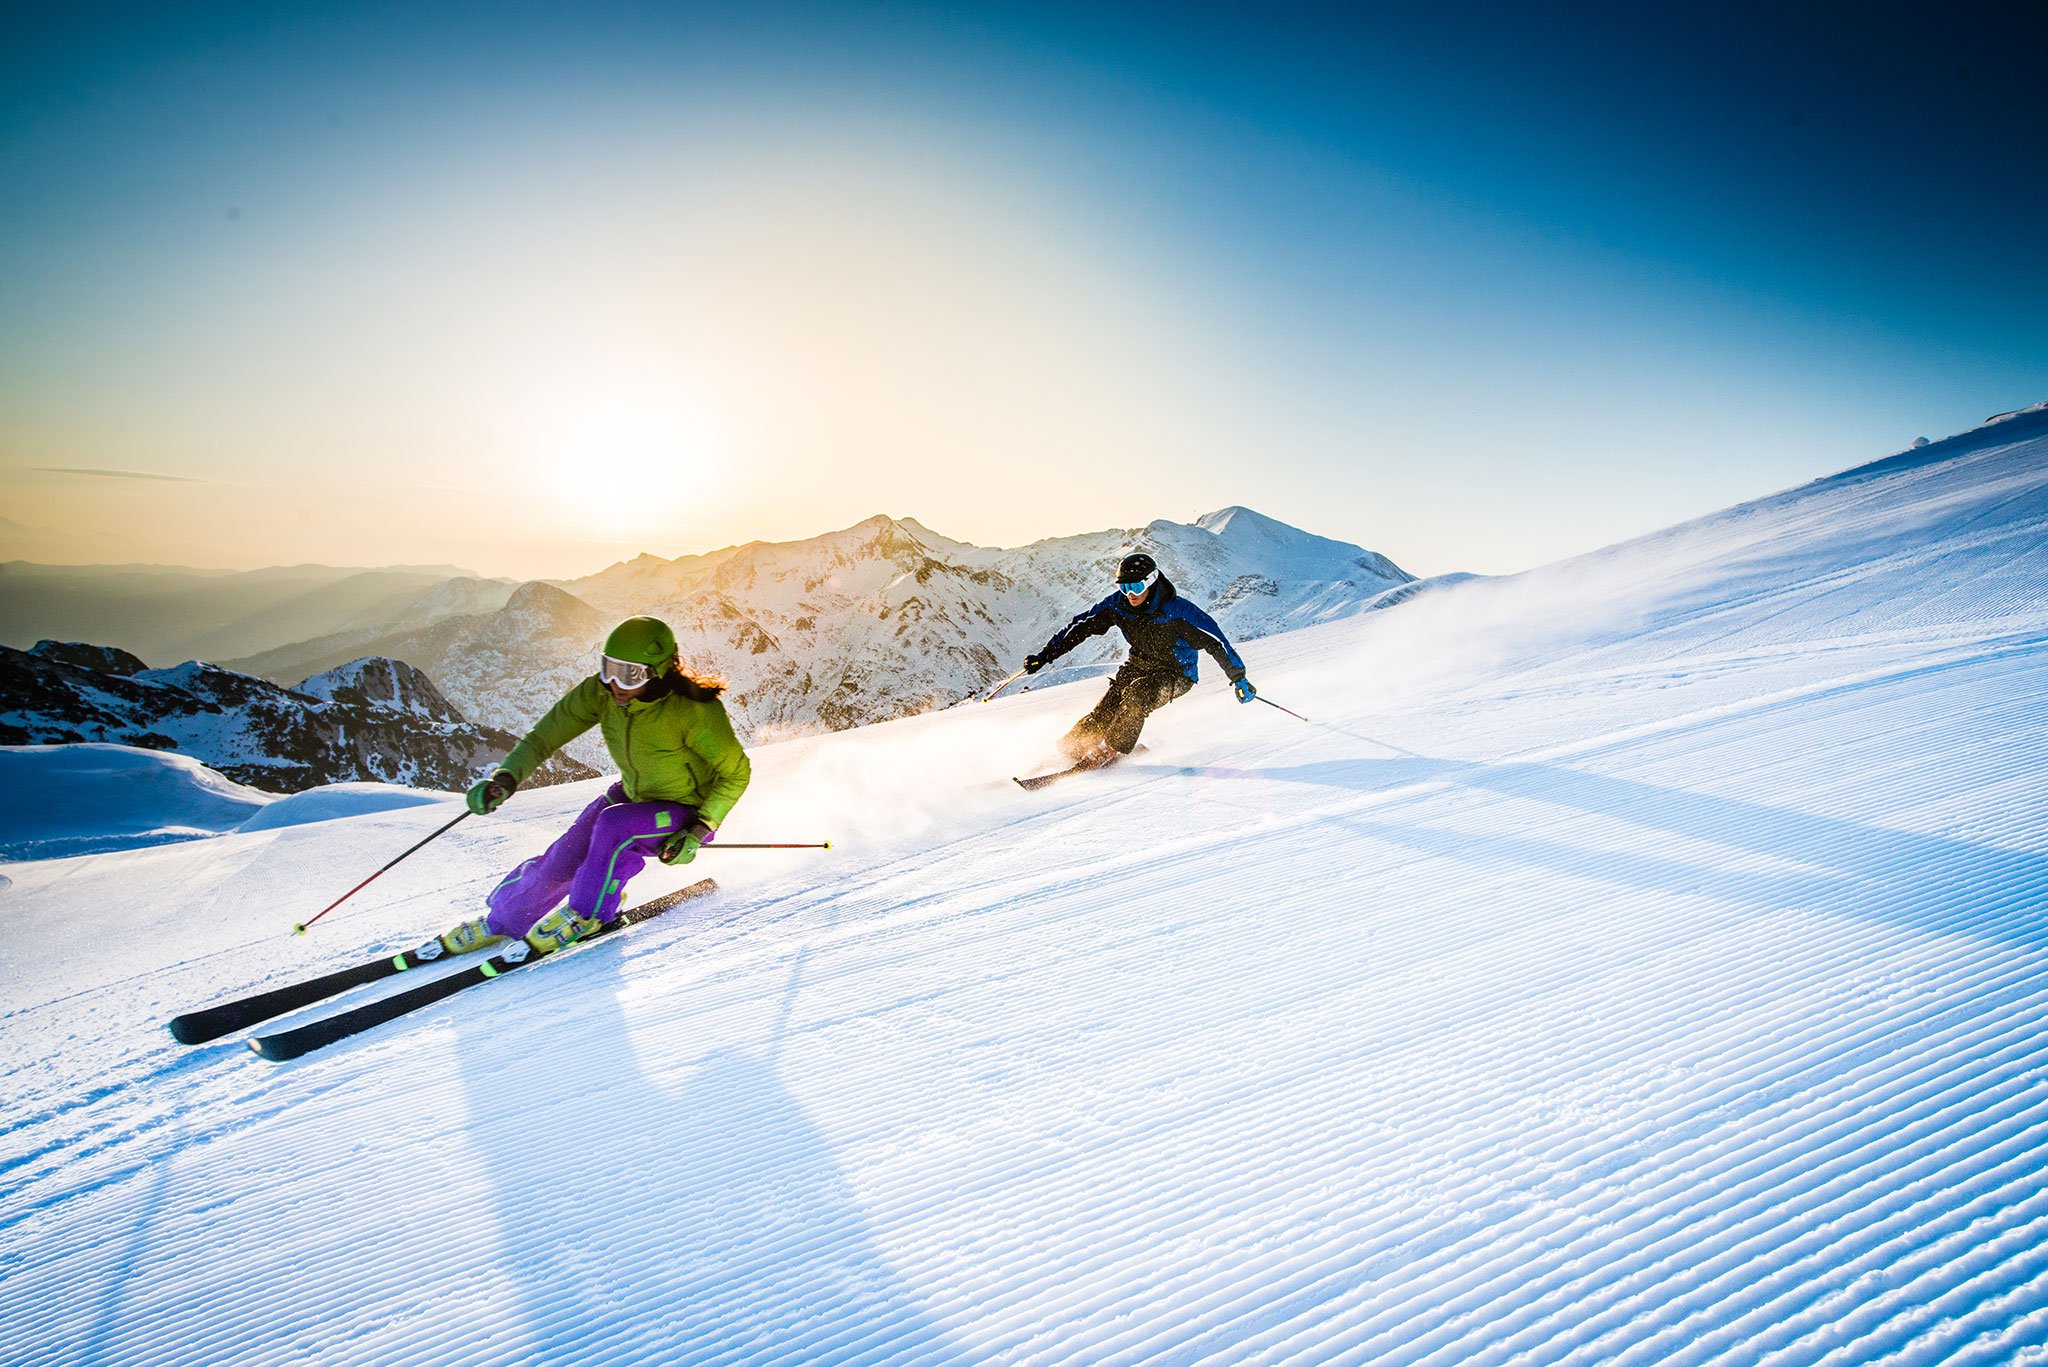 Two snow skiers lean into a turn on fresh powder.